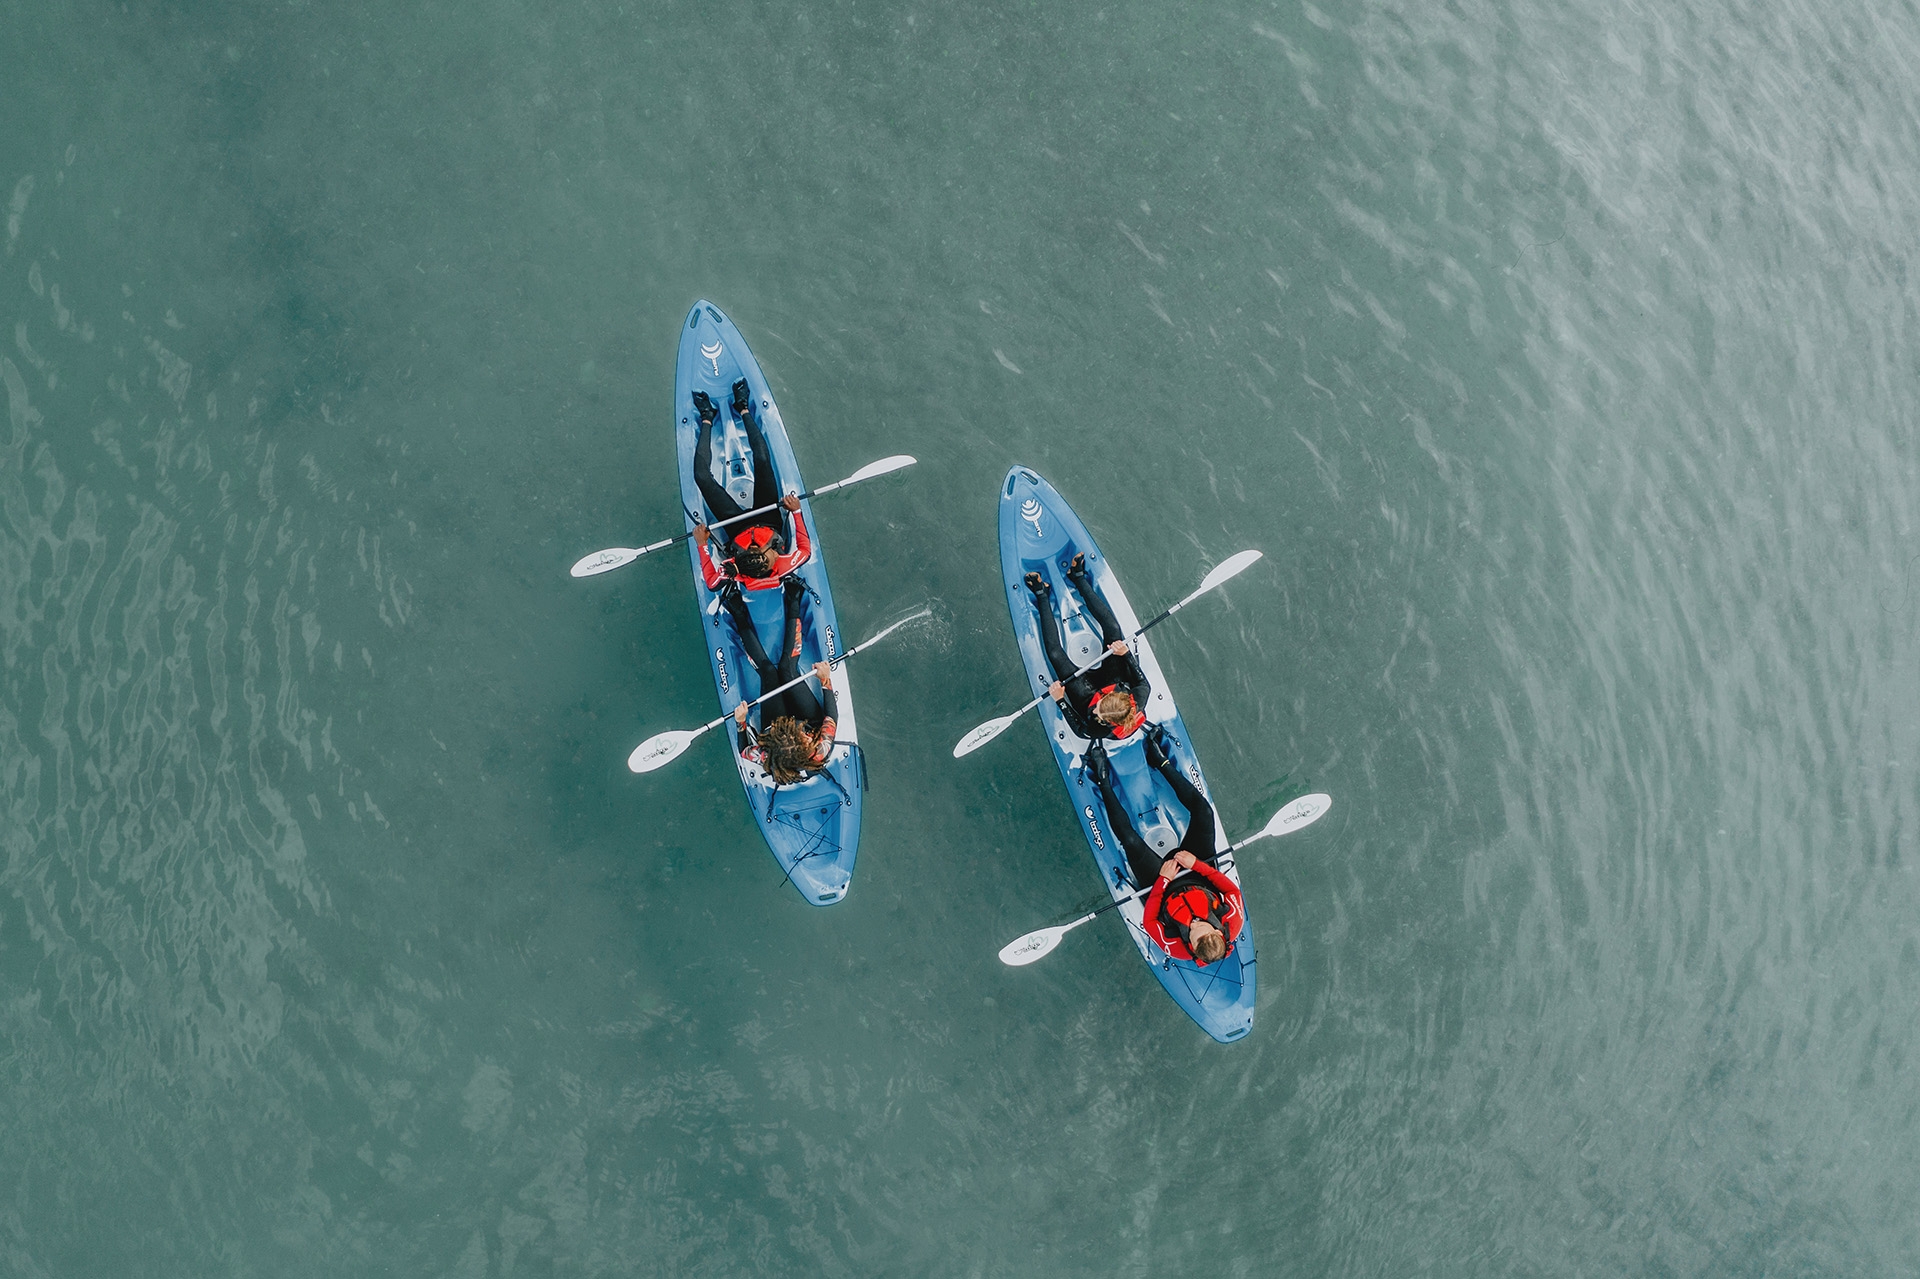 Group of friends on kayaks in the ocean 